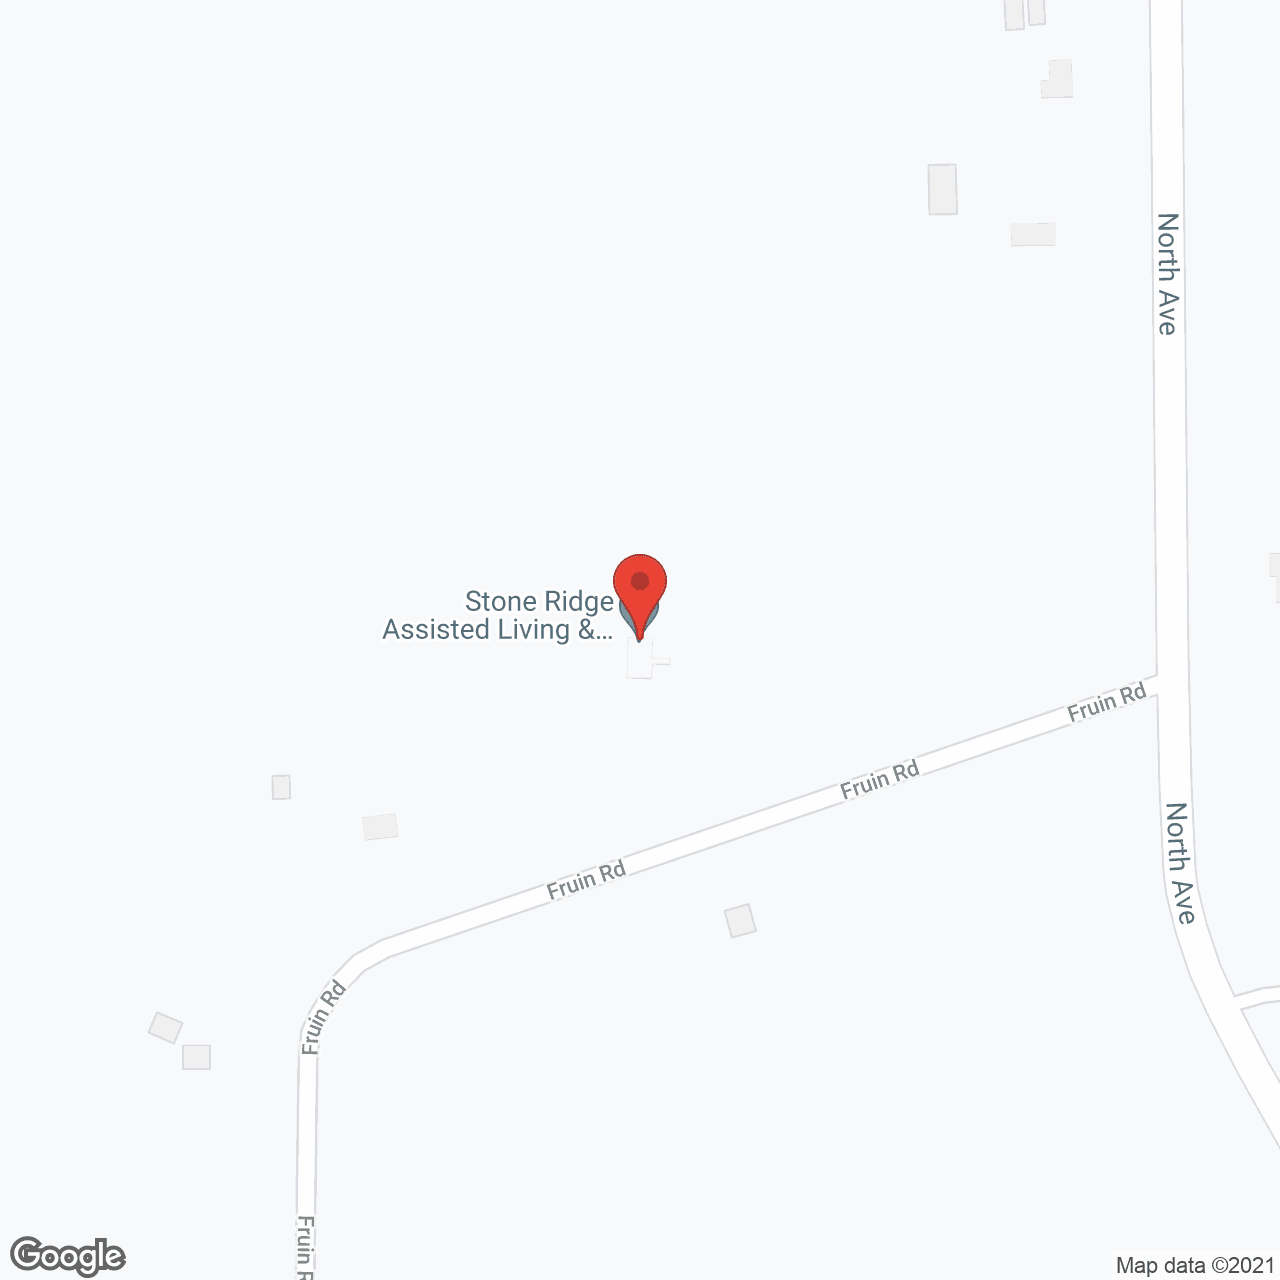 Stoneridge AFC in google map